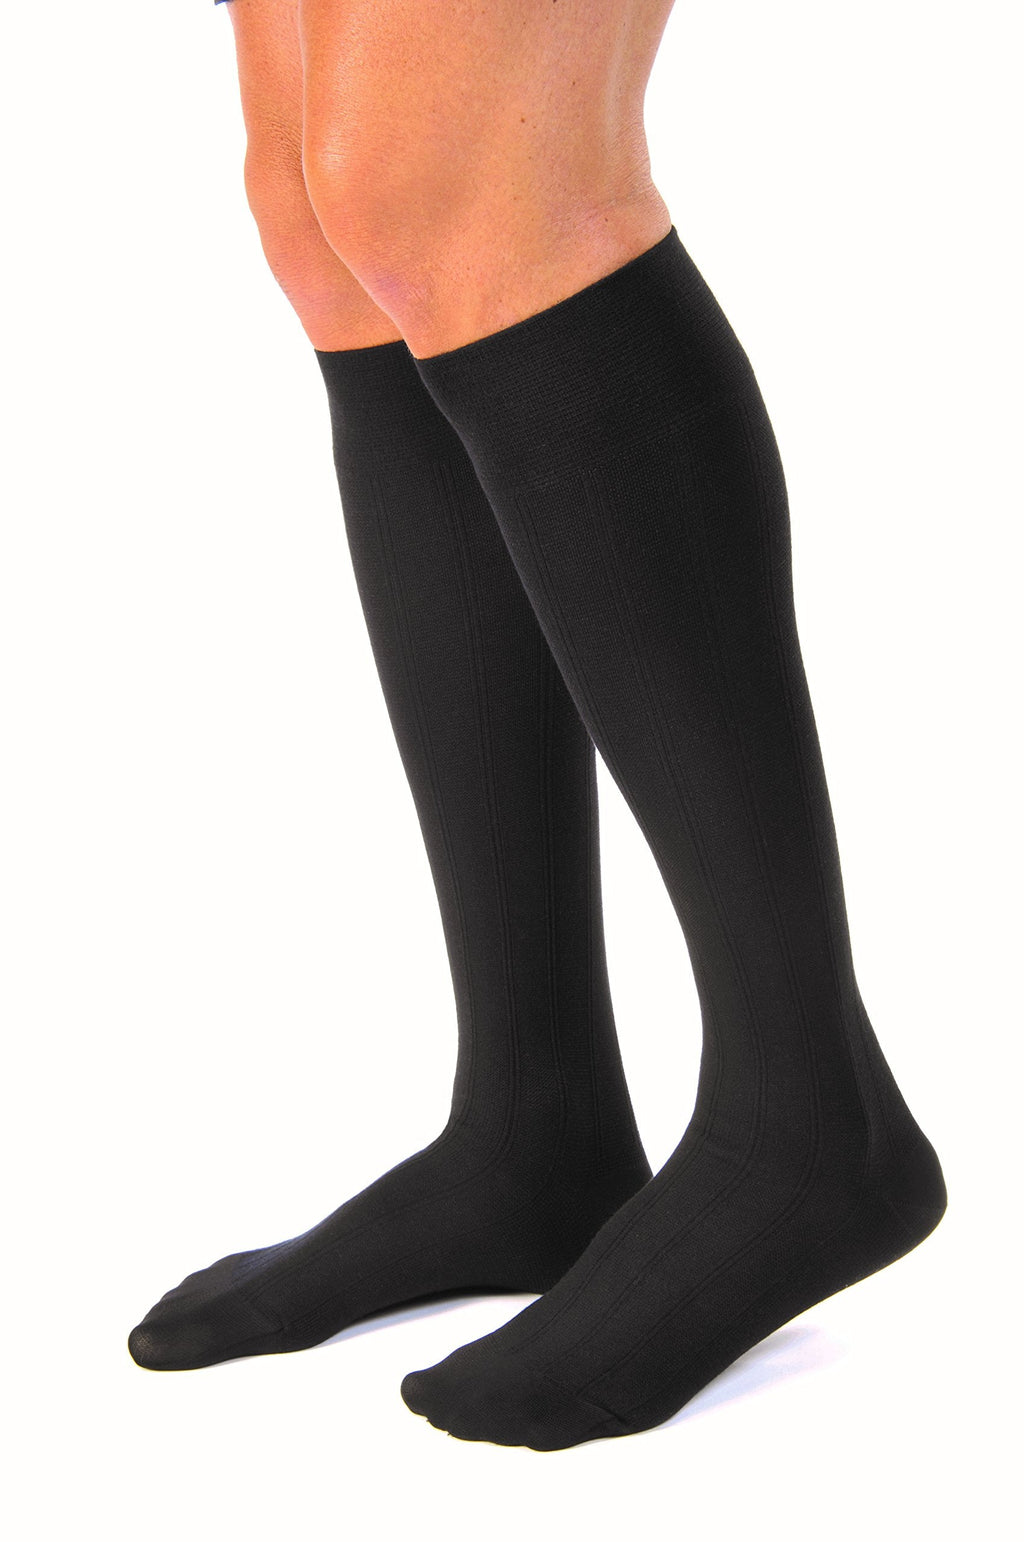 [Australia] - JOBST forMen Casual 15-20 mmHg Knee High Compression Socks, Black, Small 